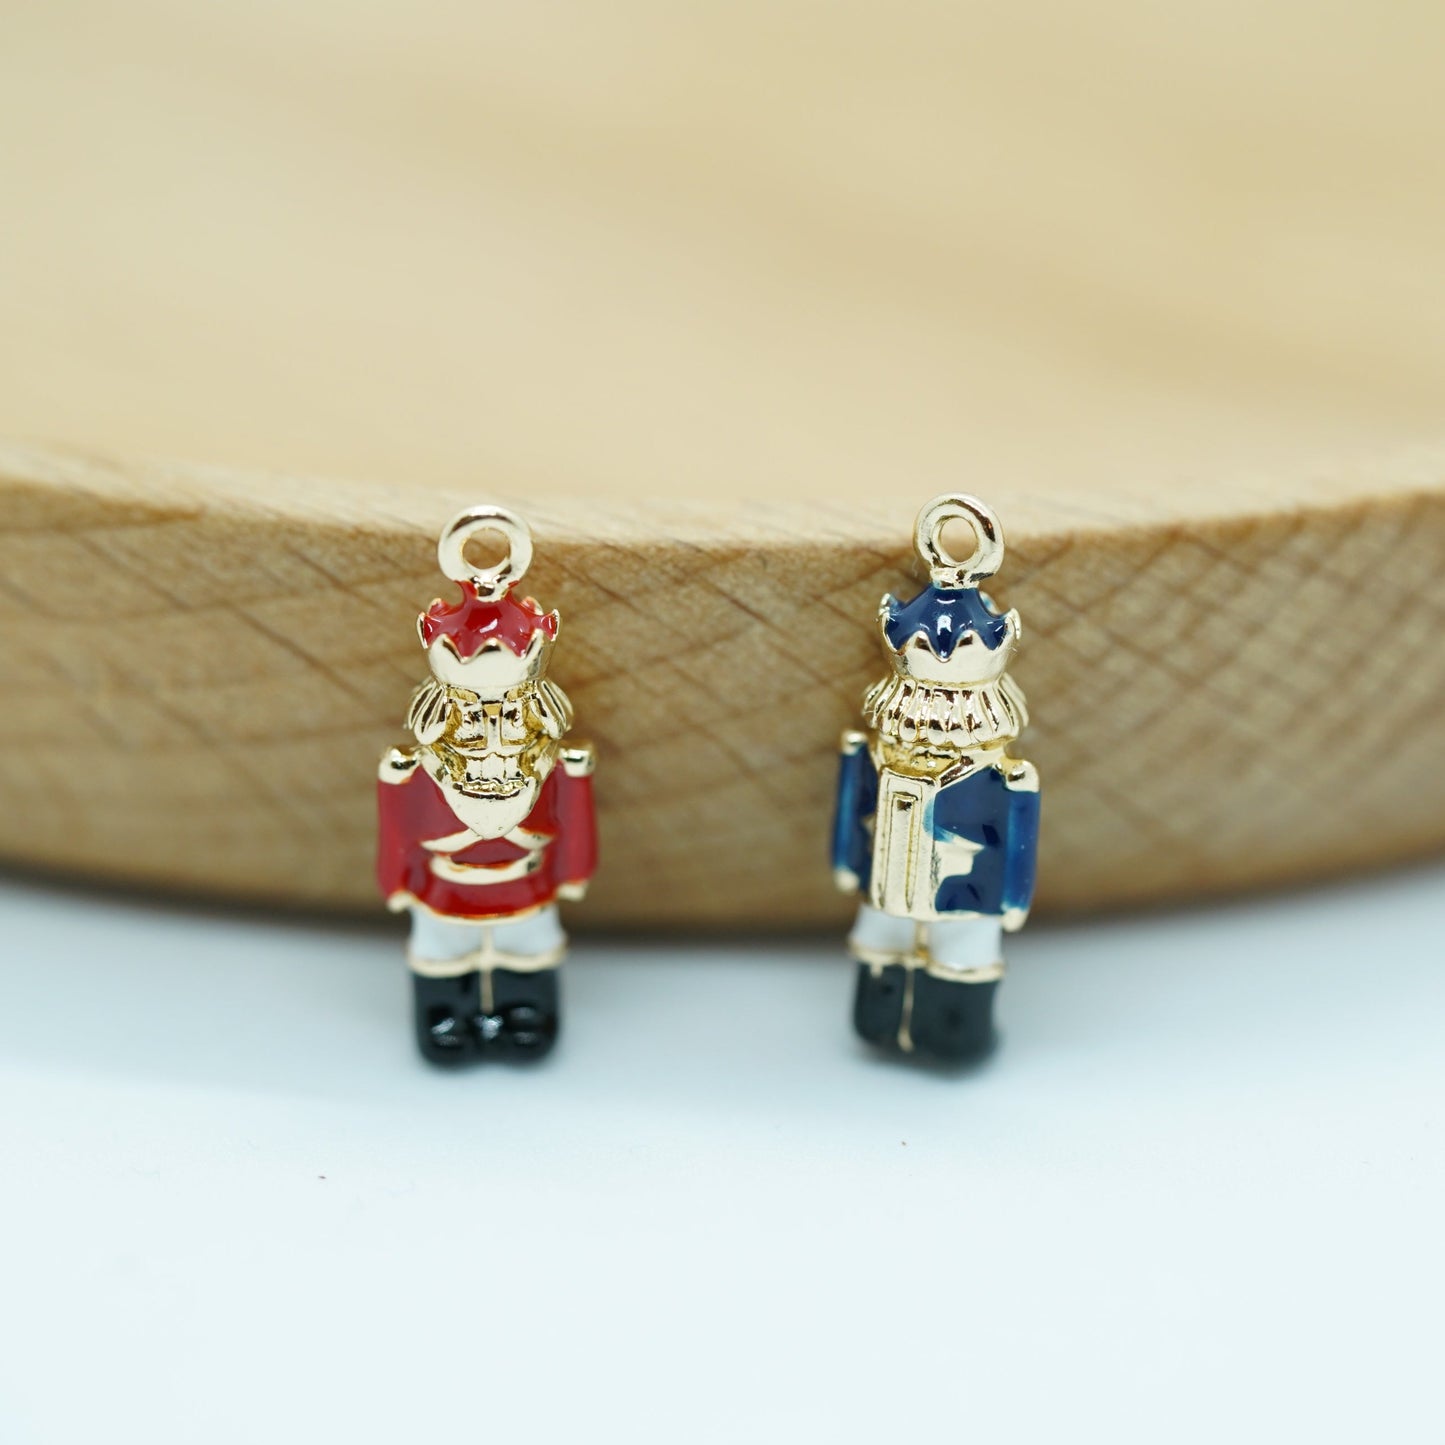 1Pcs 18K Gold Plated Nutcracker Charm, Bracelet Pendant, Nutcracker themed Charm For Jewelry Making Supplies